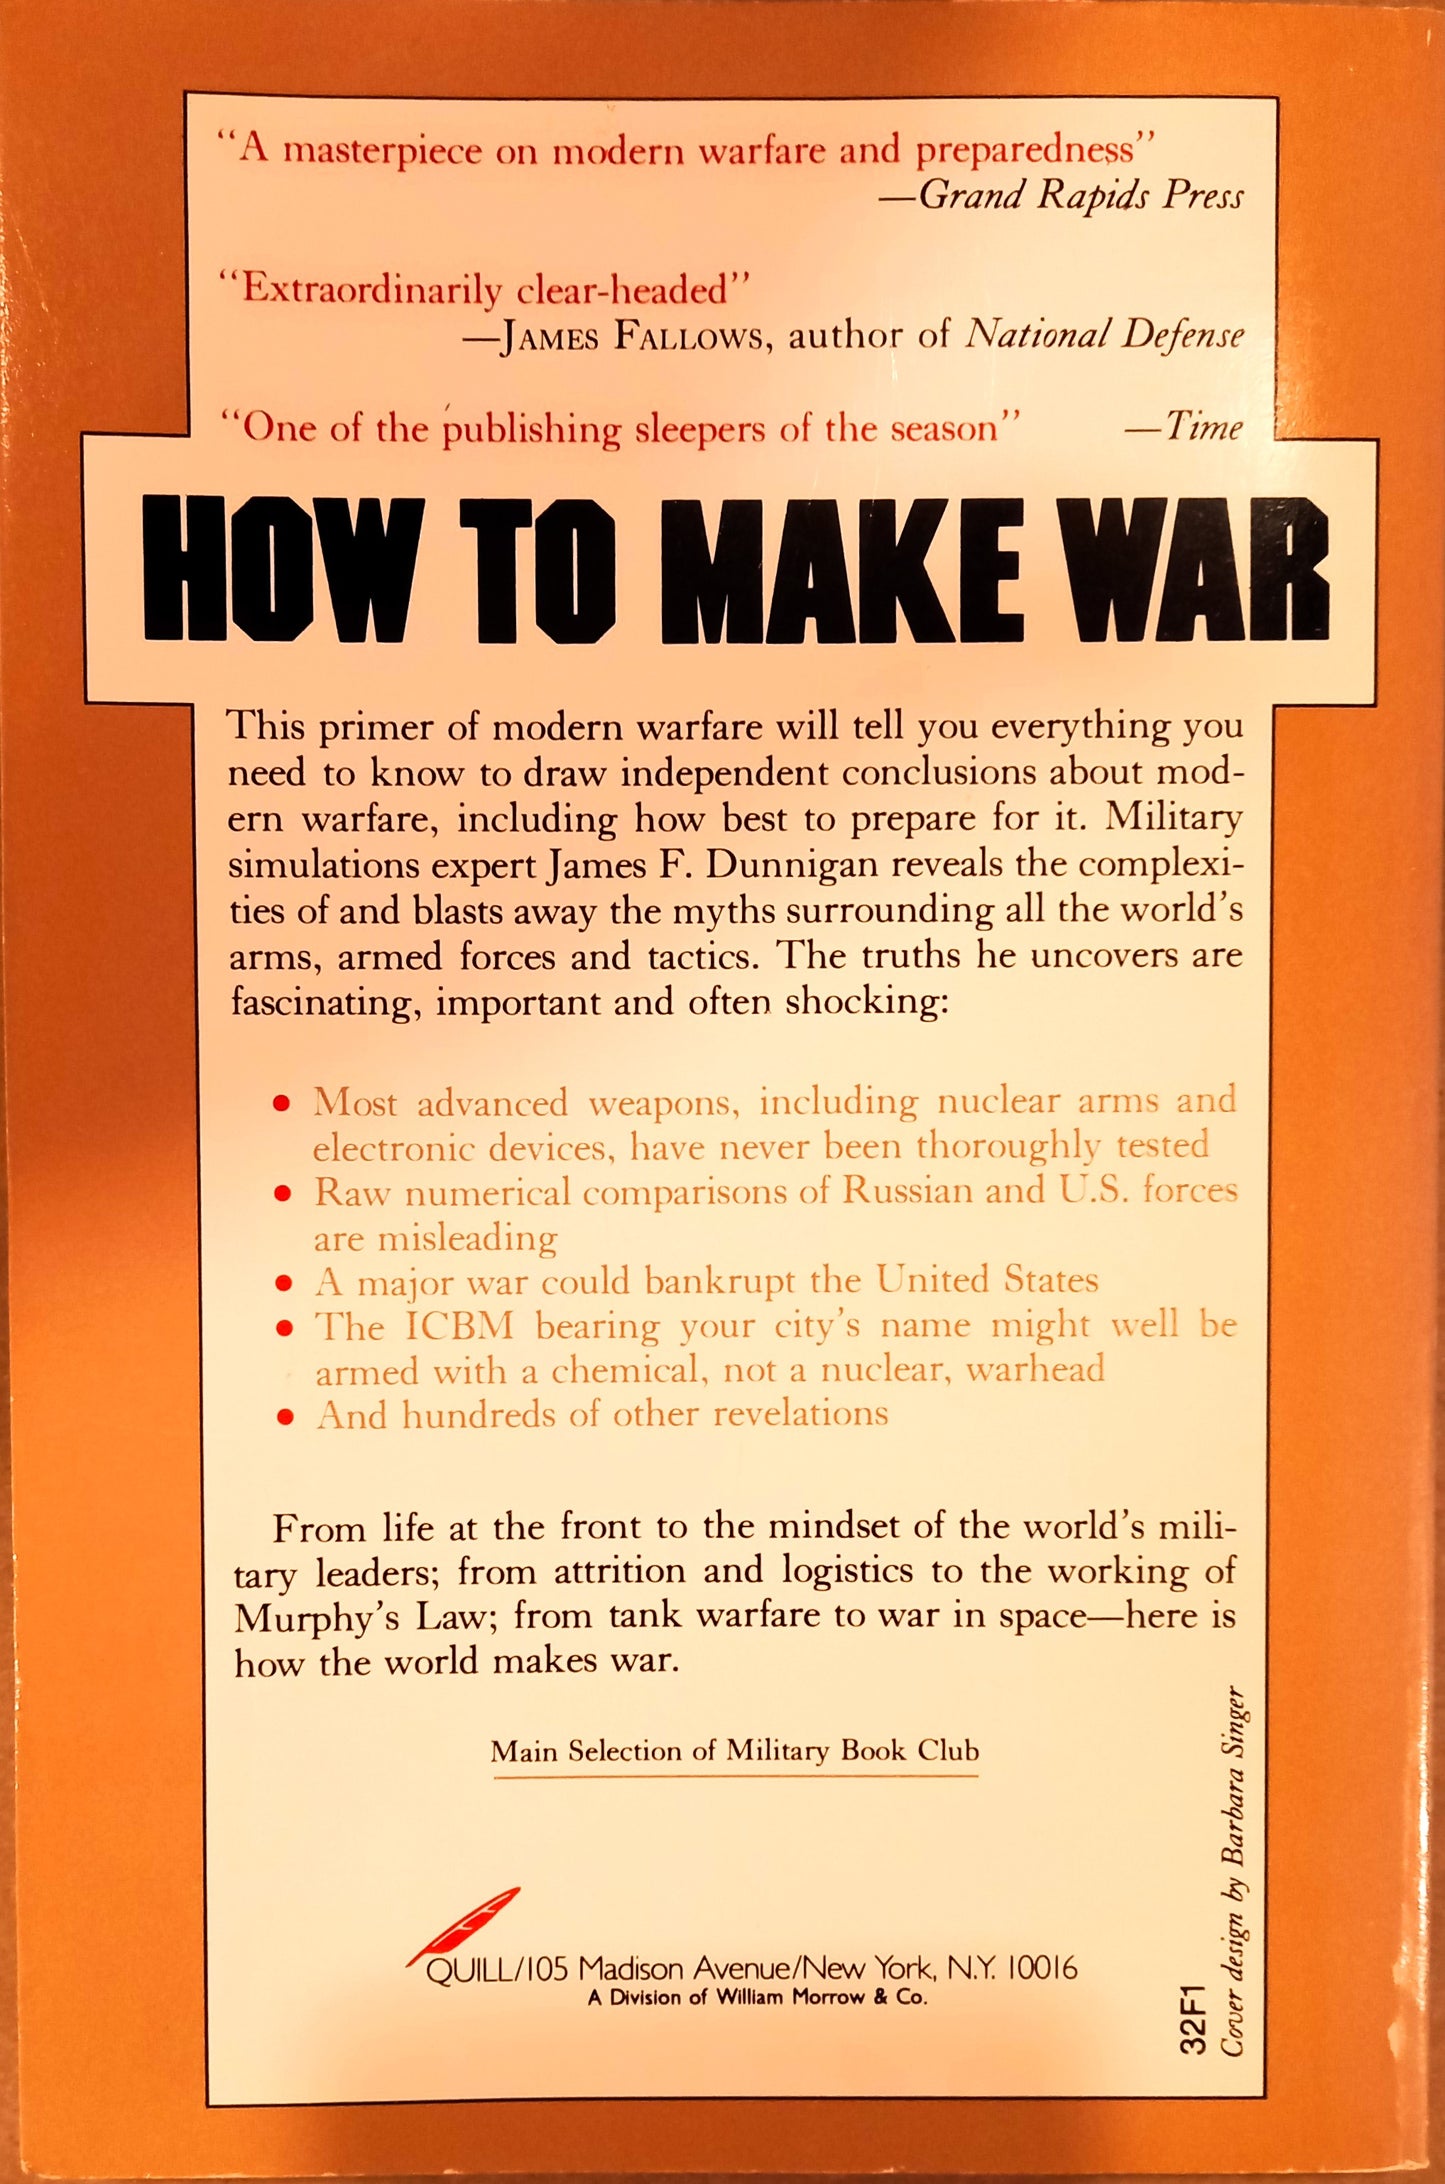 How to Make War: A Comprehensive Guide to Modern Warfare